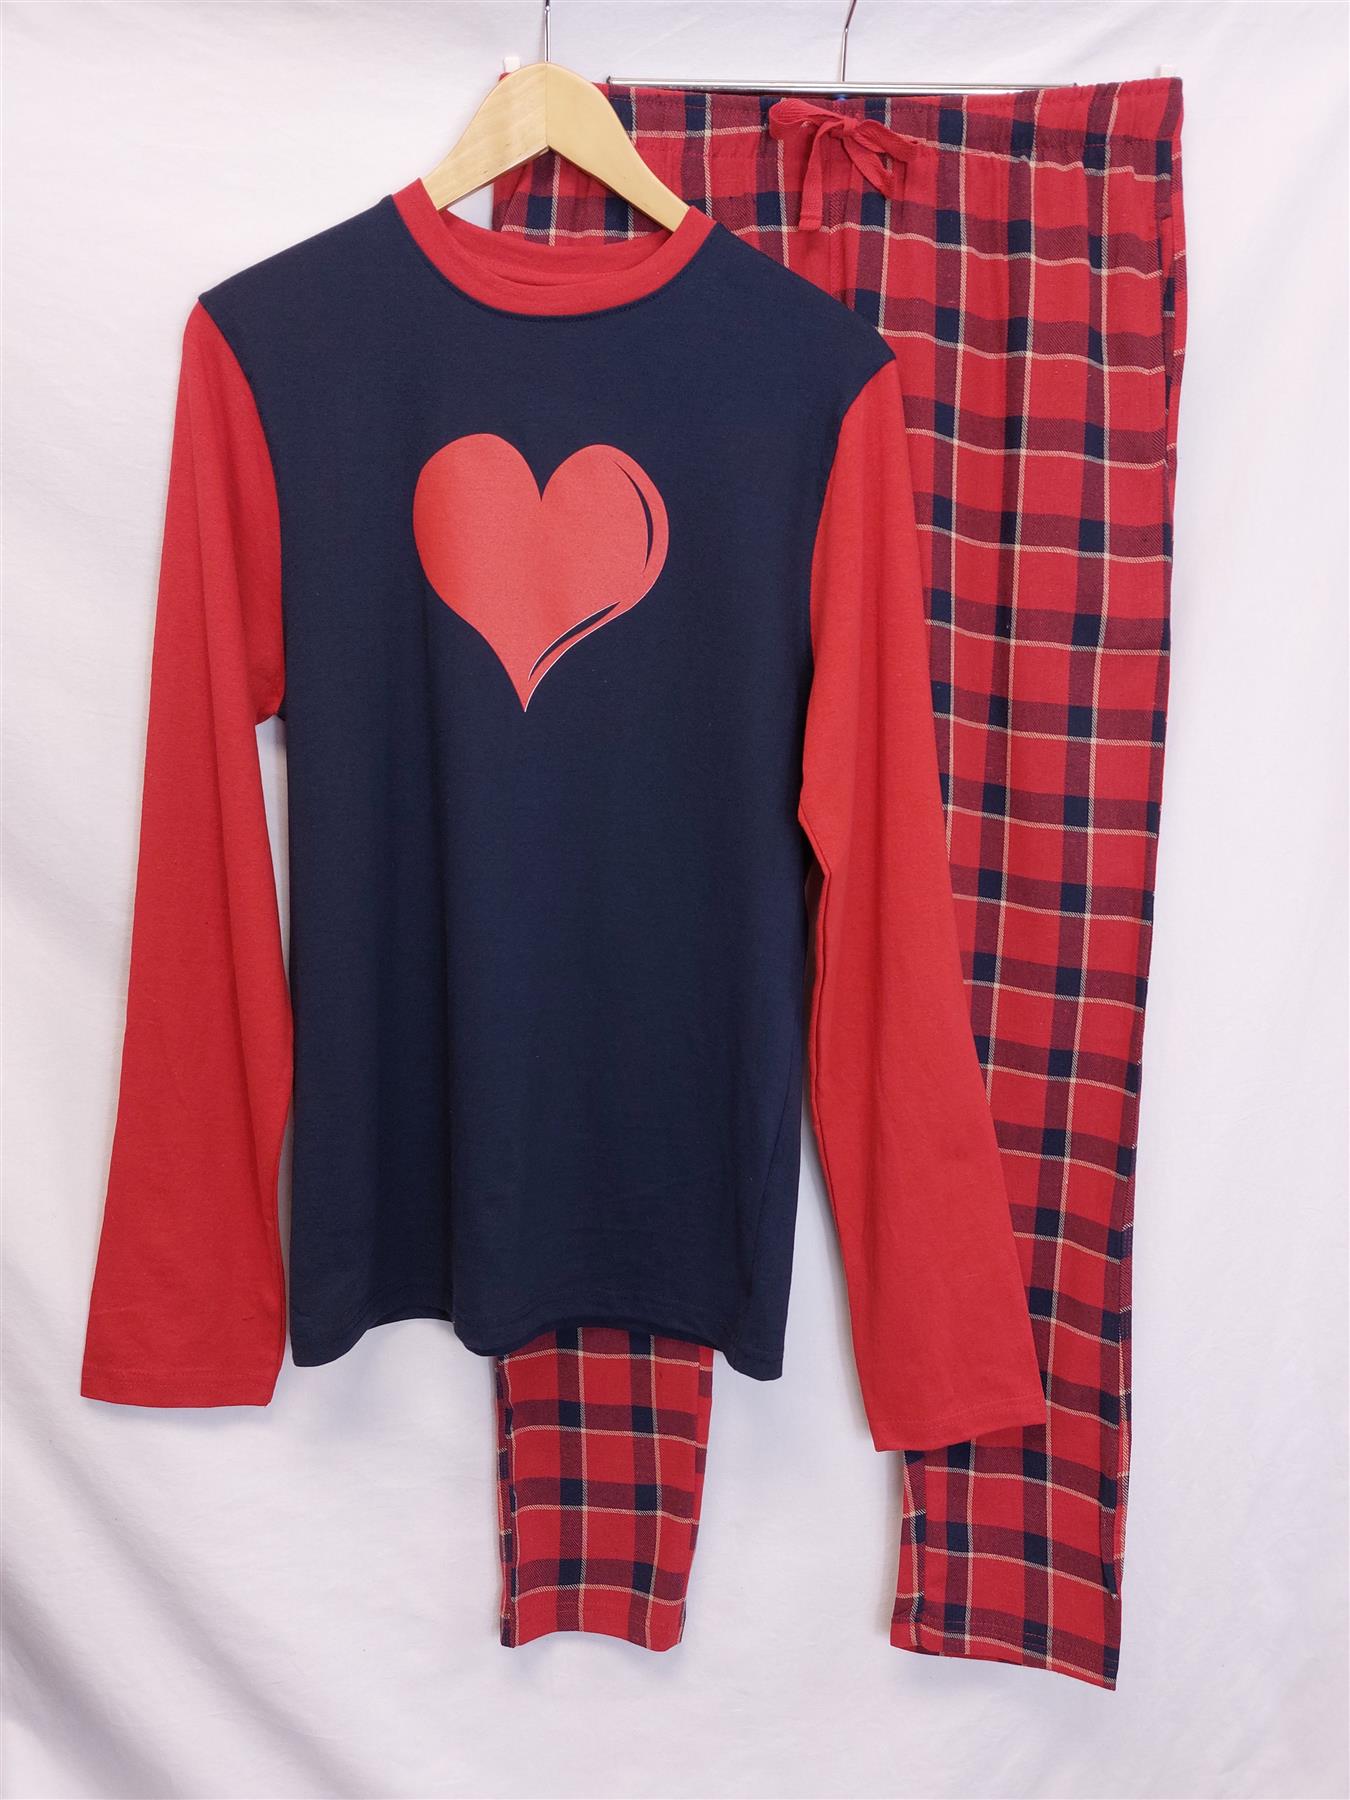 Women's Heart Pyjama Set Cotton Rich Comfy Warm PJs Sleepwear Valentine's Love